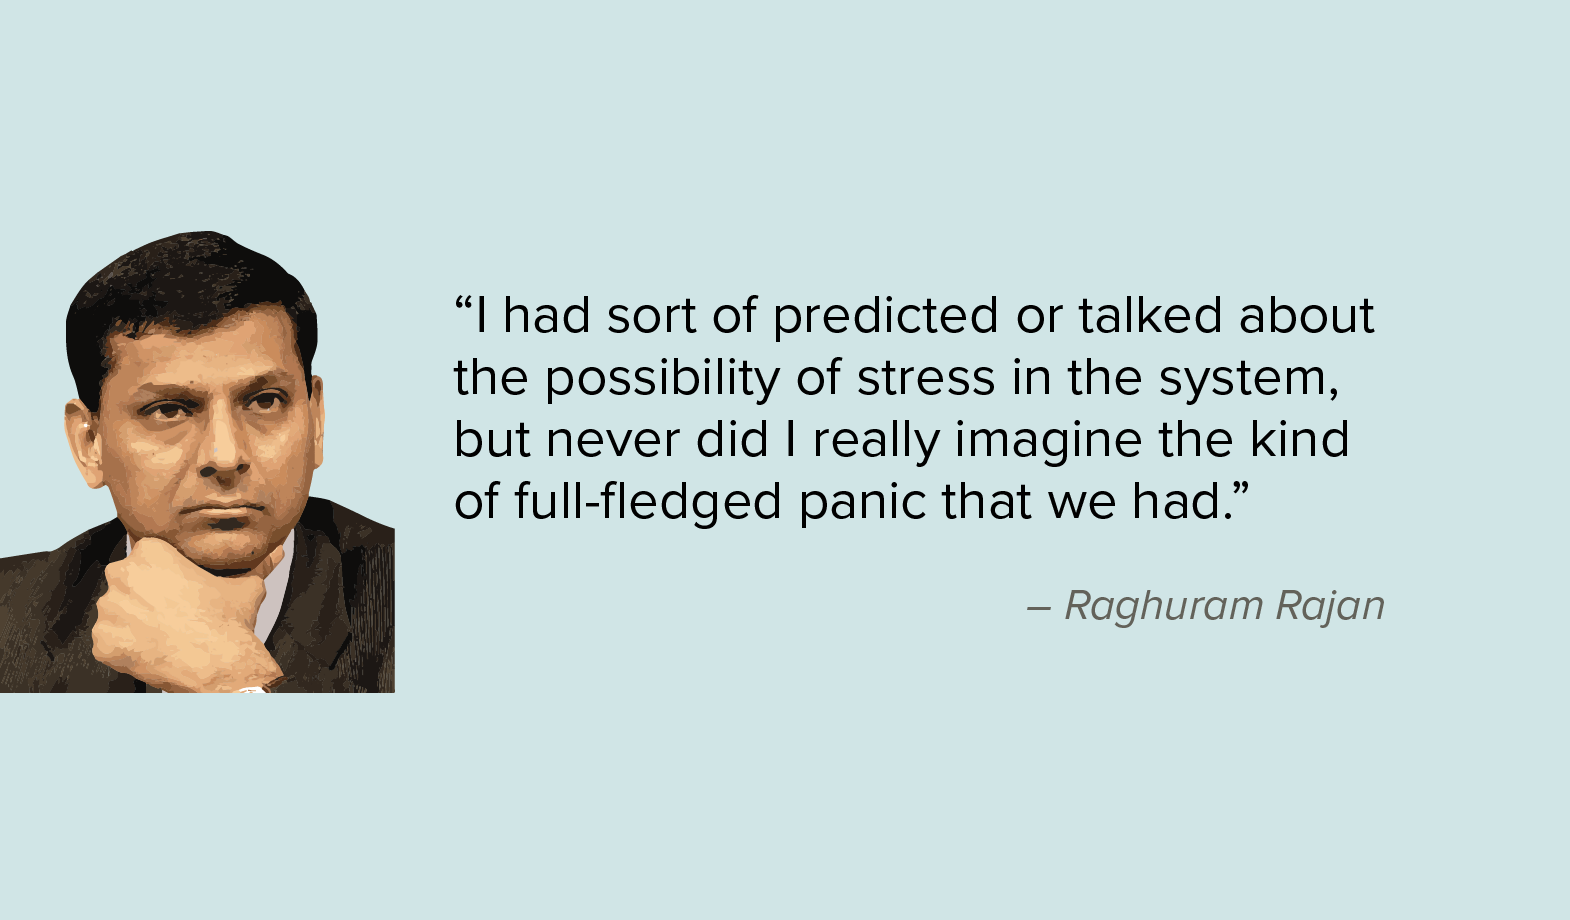 Raghuram Rajan: “Never did I really imagine the kind of full-fledged panic that we had.” 